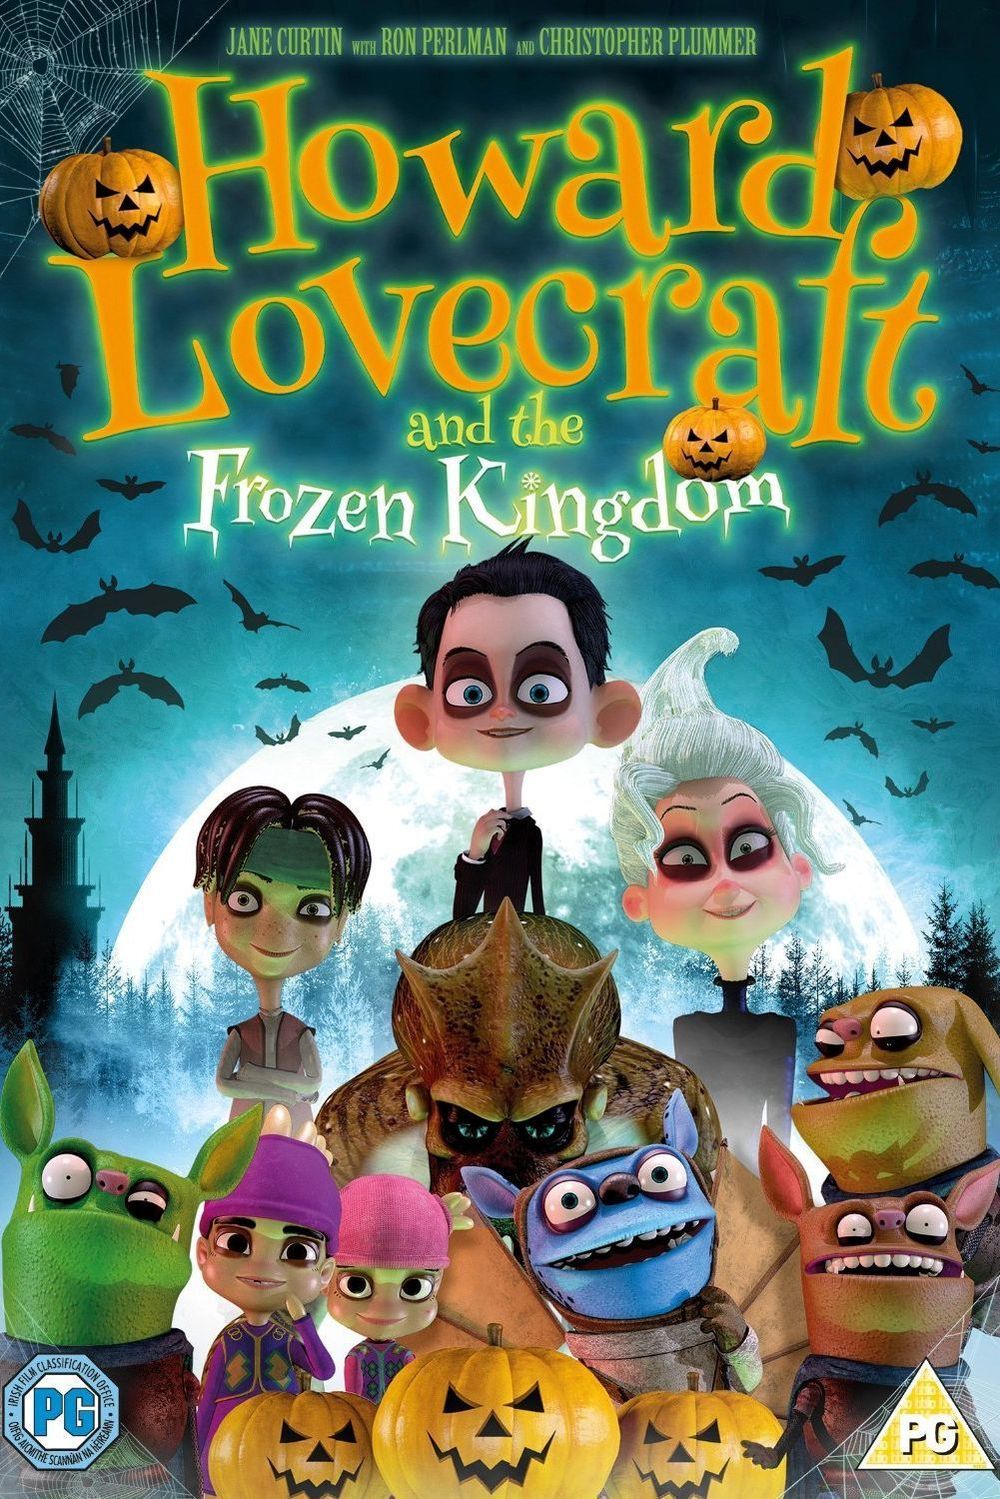 affiche du film Howard Lovecraft and the Frozen Kingdom